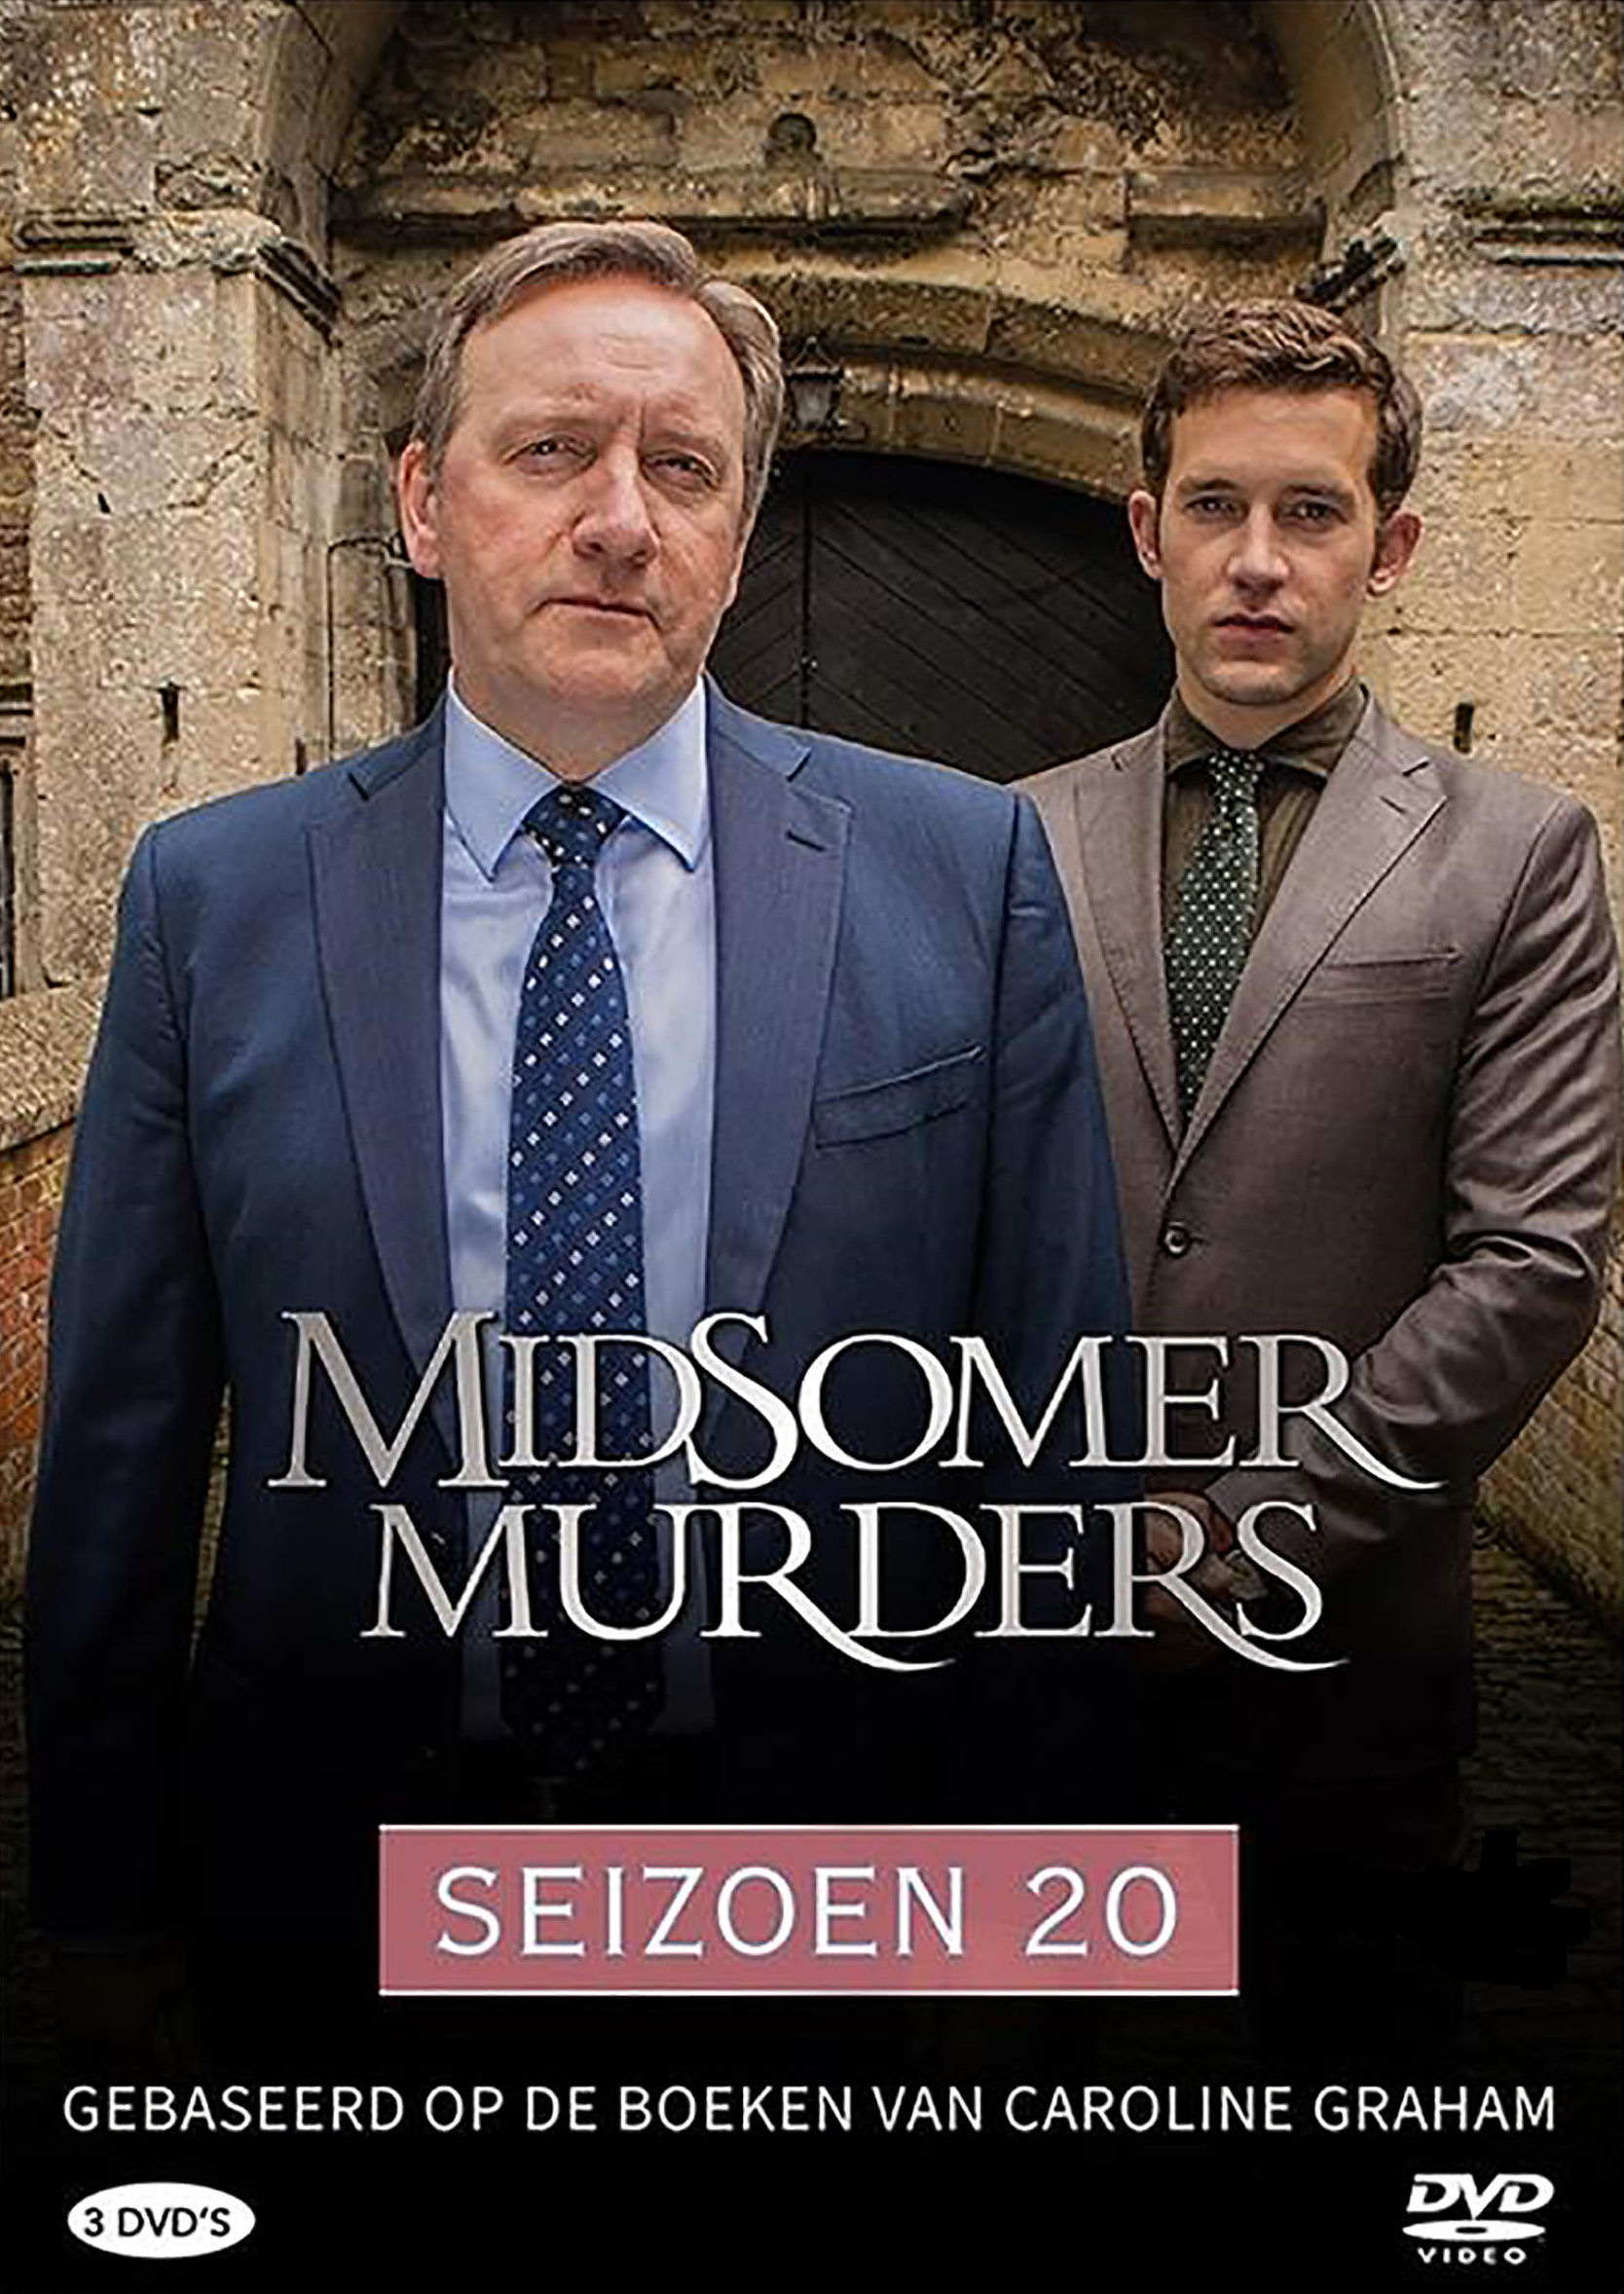 Midsomer Murders Seizoen 20 - DvD 3 ( Afl 5 - 6 ) Finale